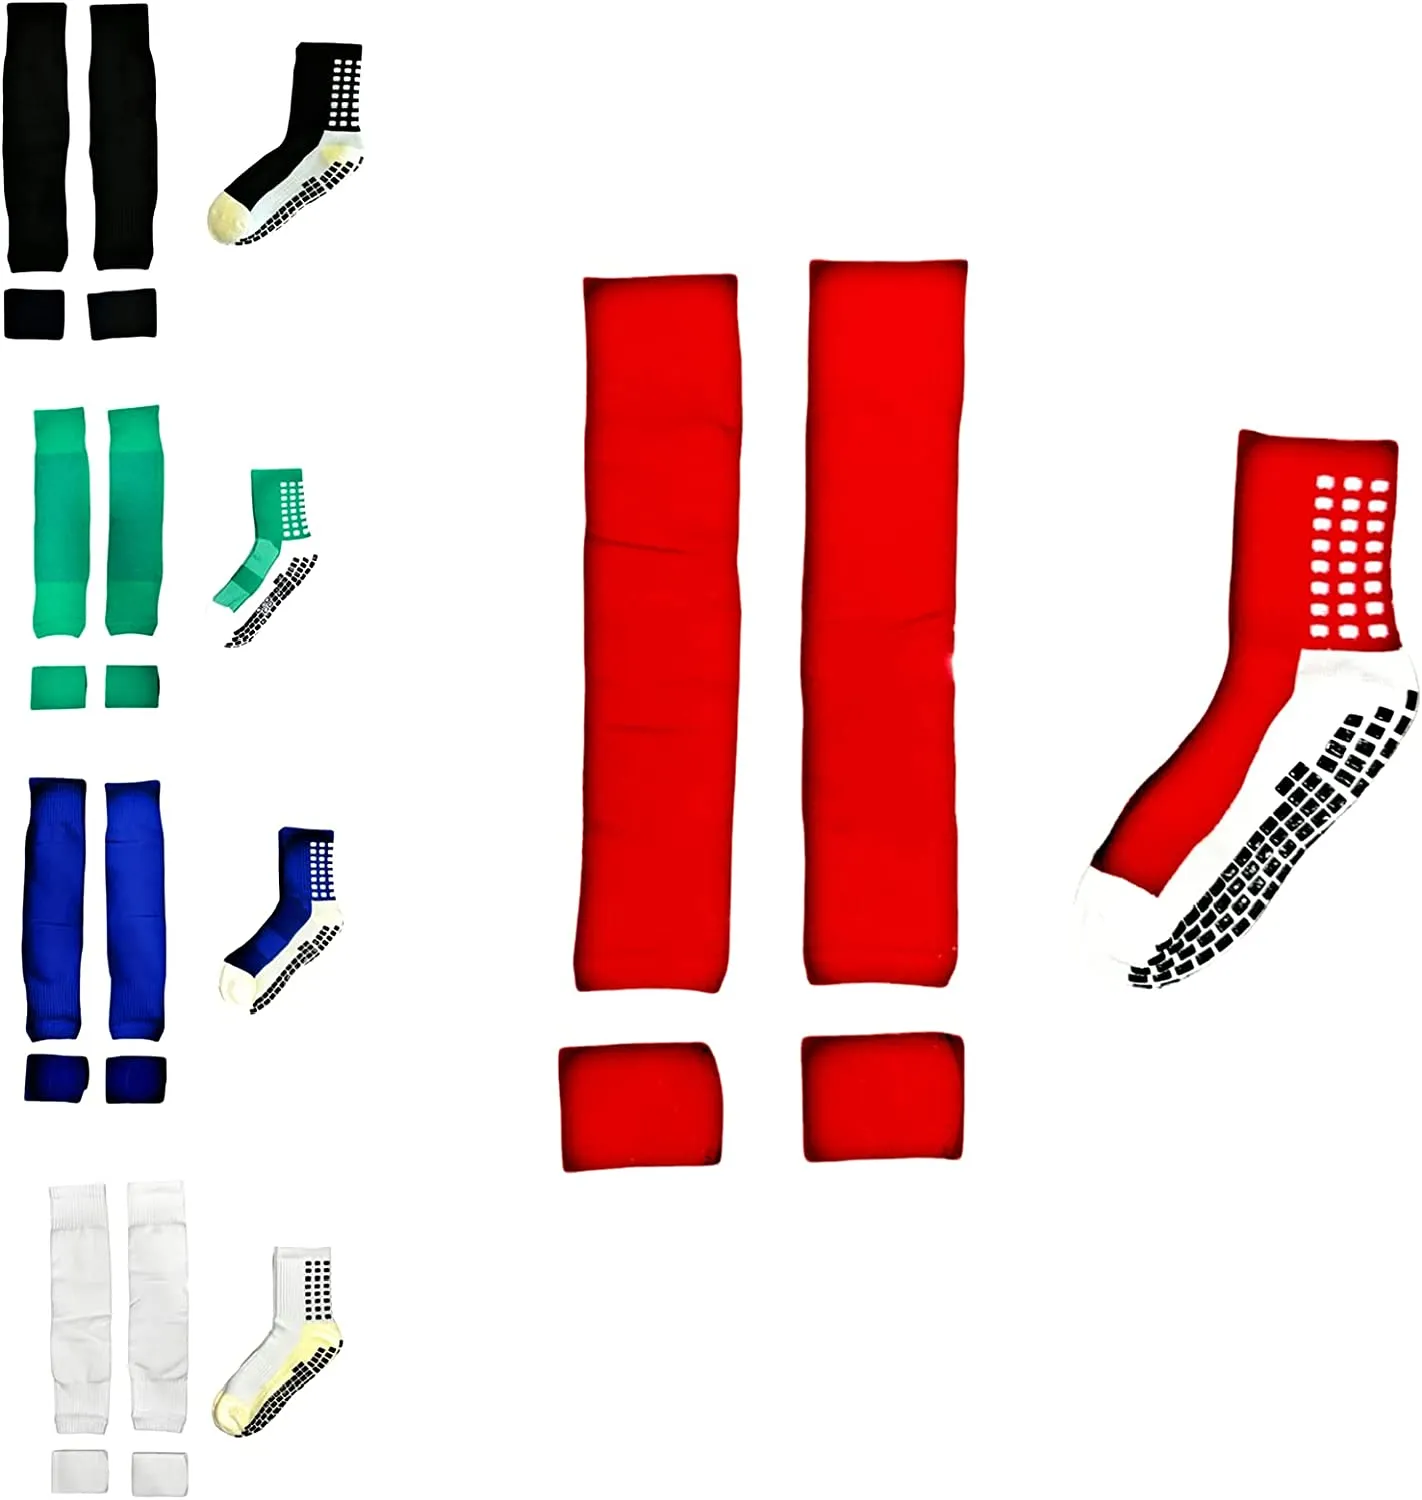 The Grip Sock Grip Socks, Leg Sleeves and Shin Guard Straps Bundle Set WHITE